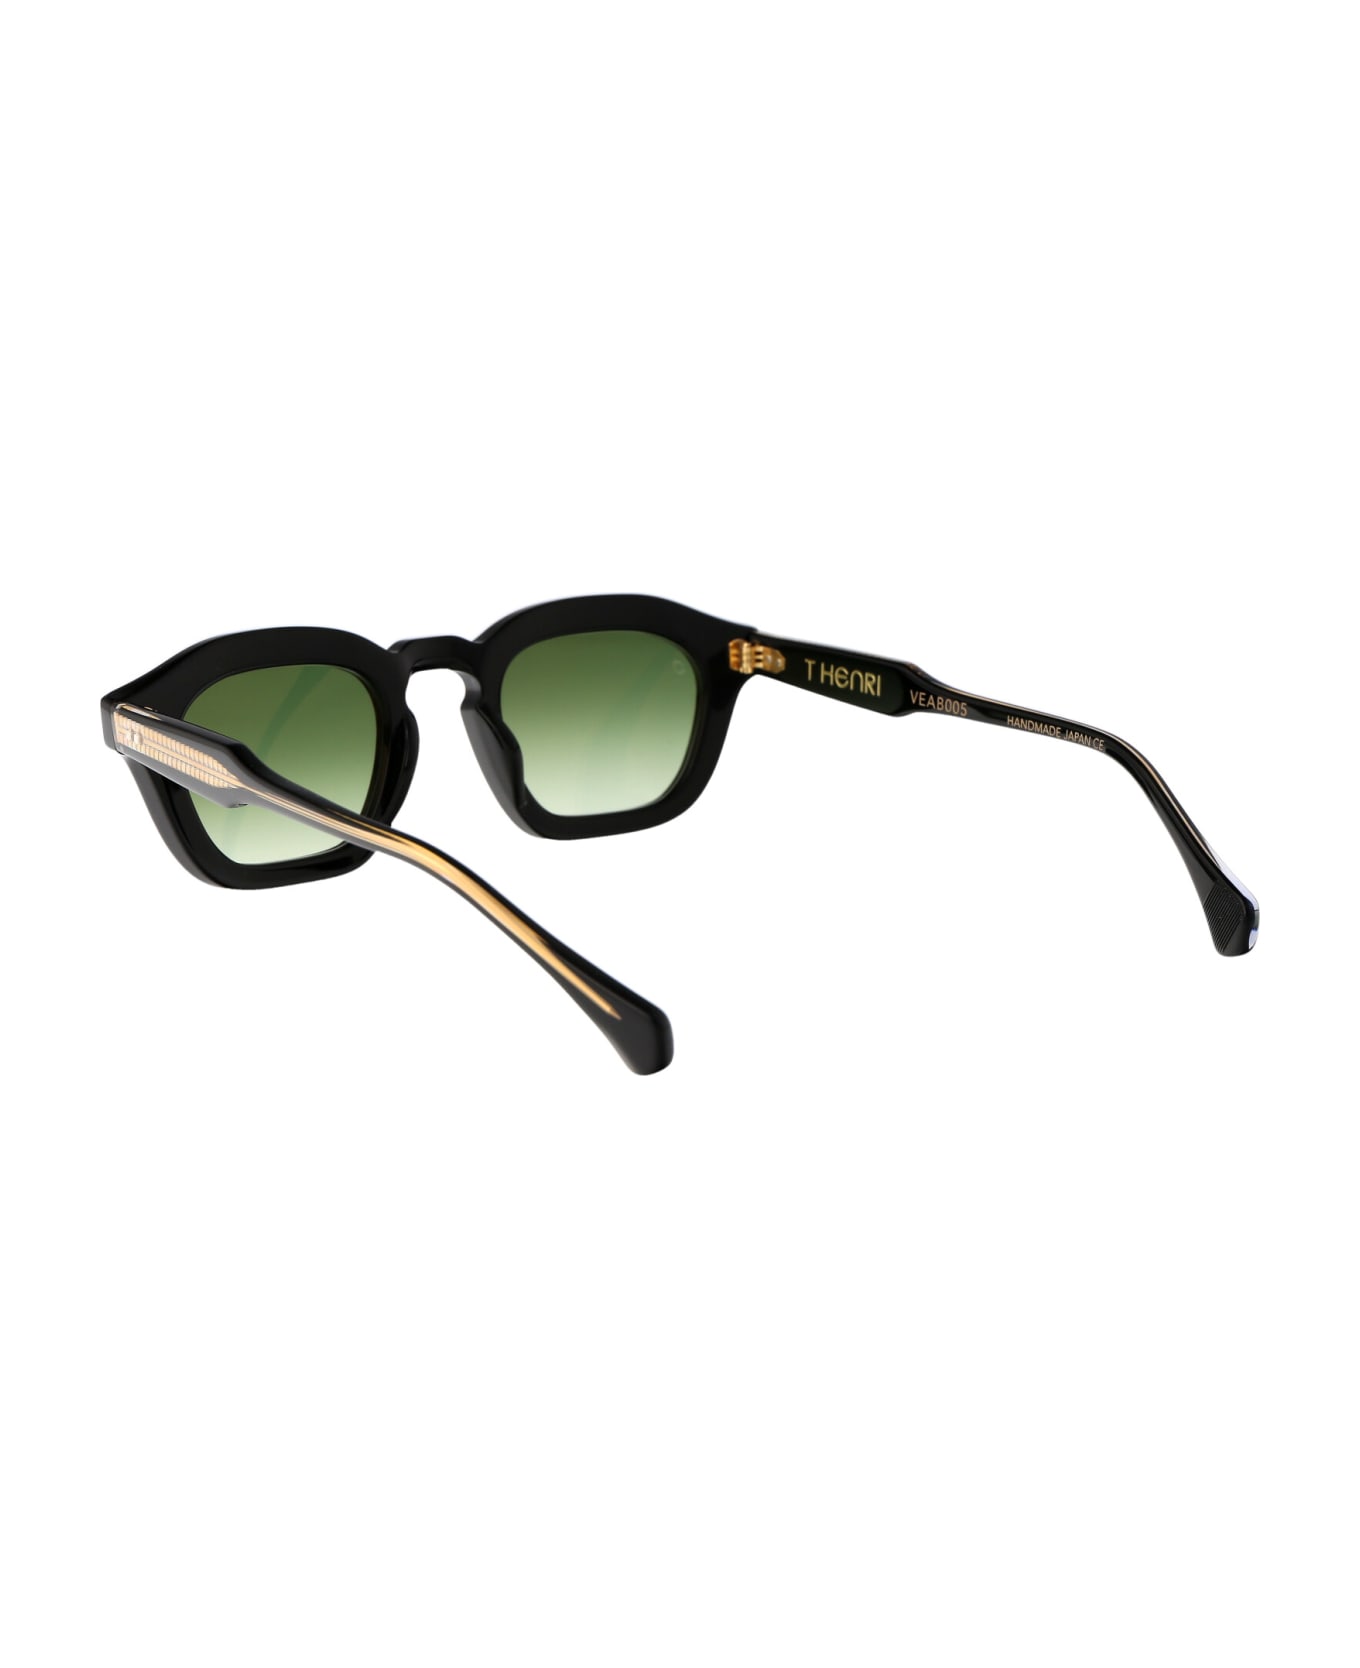 T Henri Veneno Sunglasses - ASTEROID